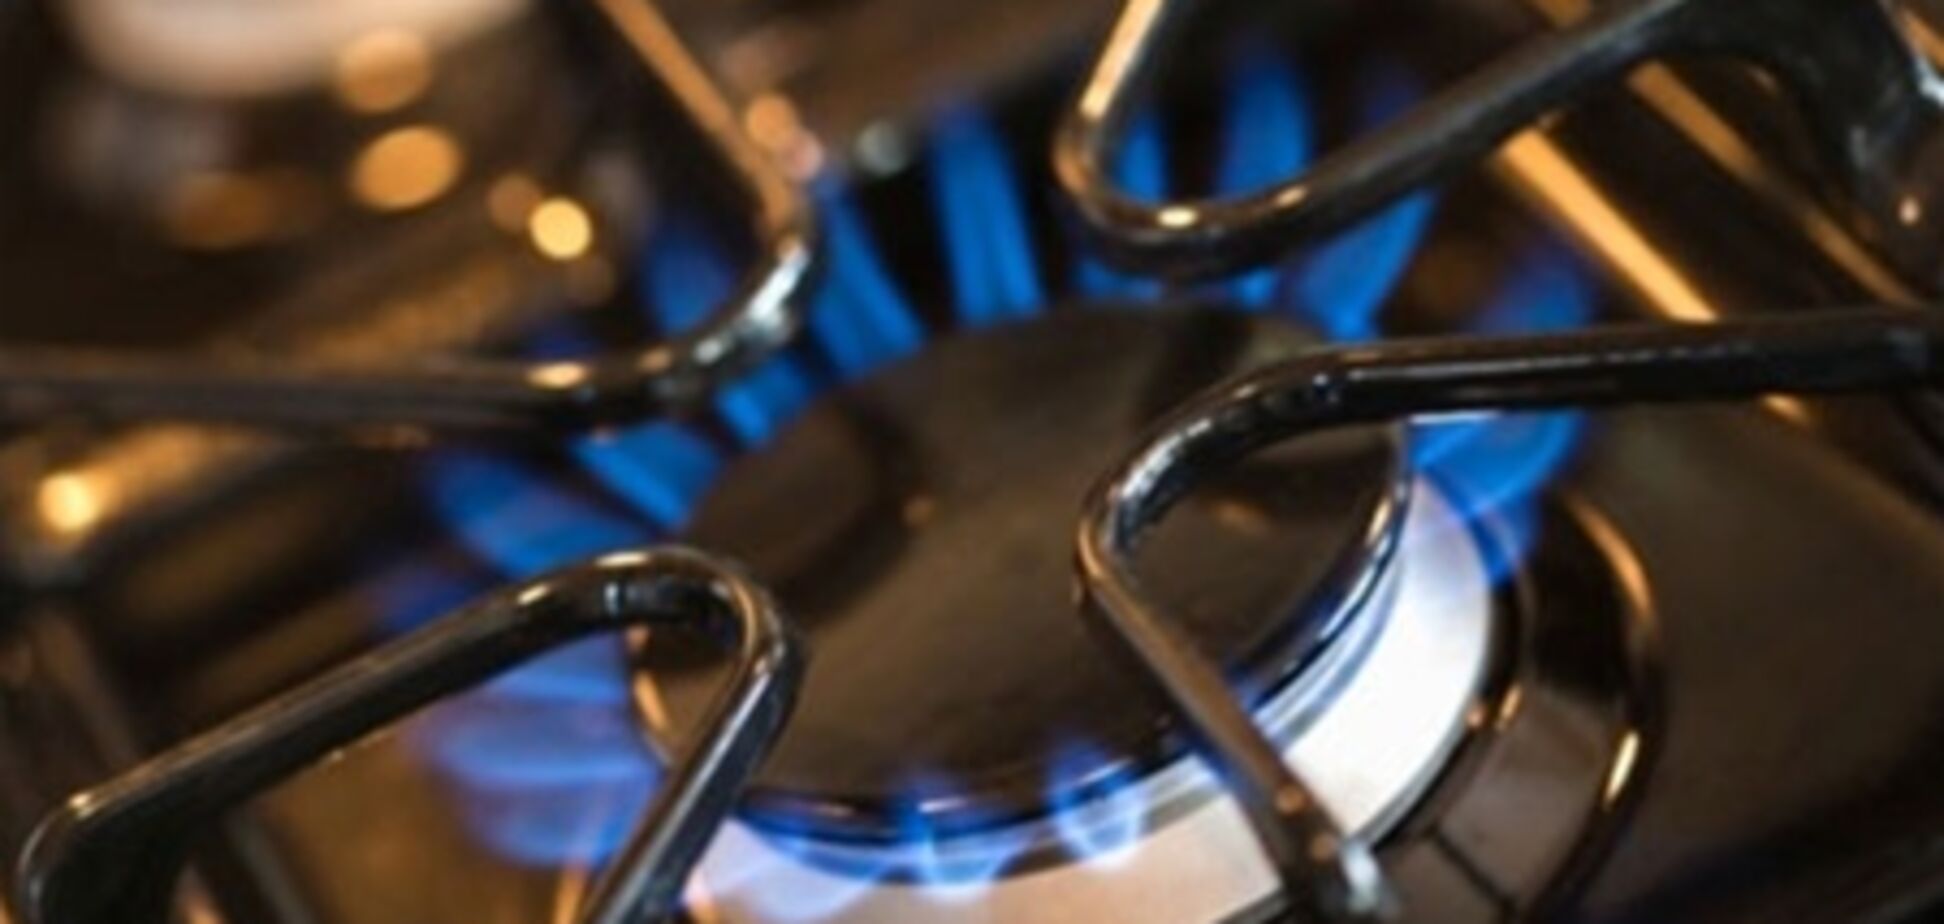 Цены на газ вырастут на 30%, а коммунальные тарифы на 62%, — меморандум МВФ